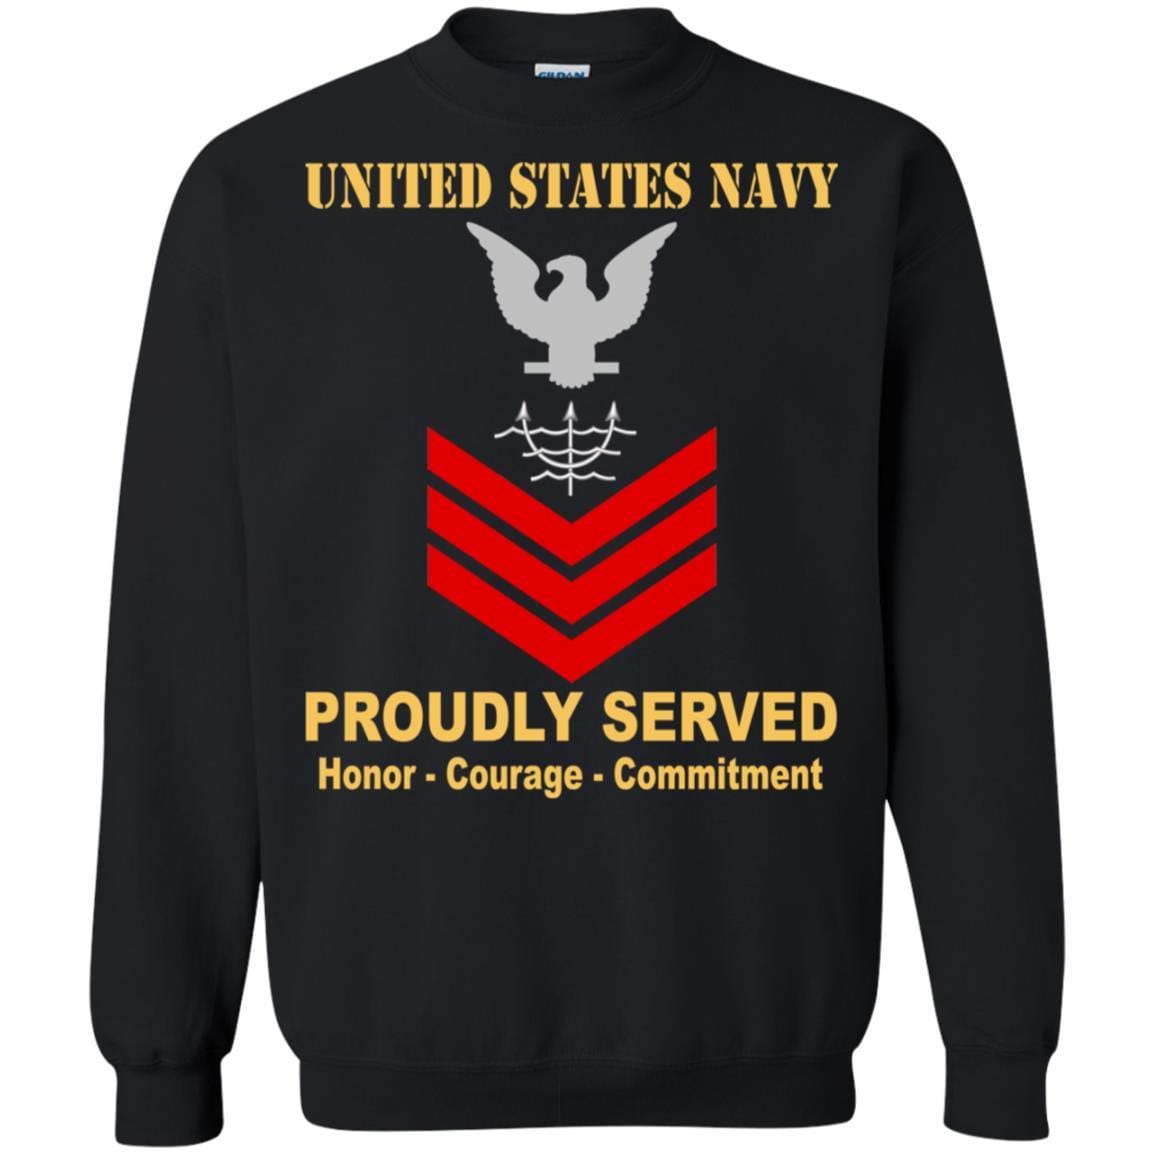 Navy Ocean Systems Technician Navy OT E-6 Rating Badges Proudly Served T-Shirt For Men On Front-TShirt-Navy-Veterans Nation